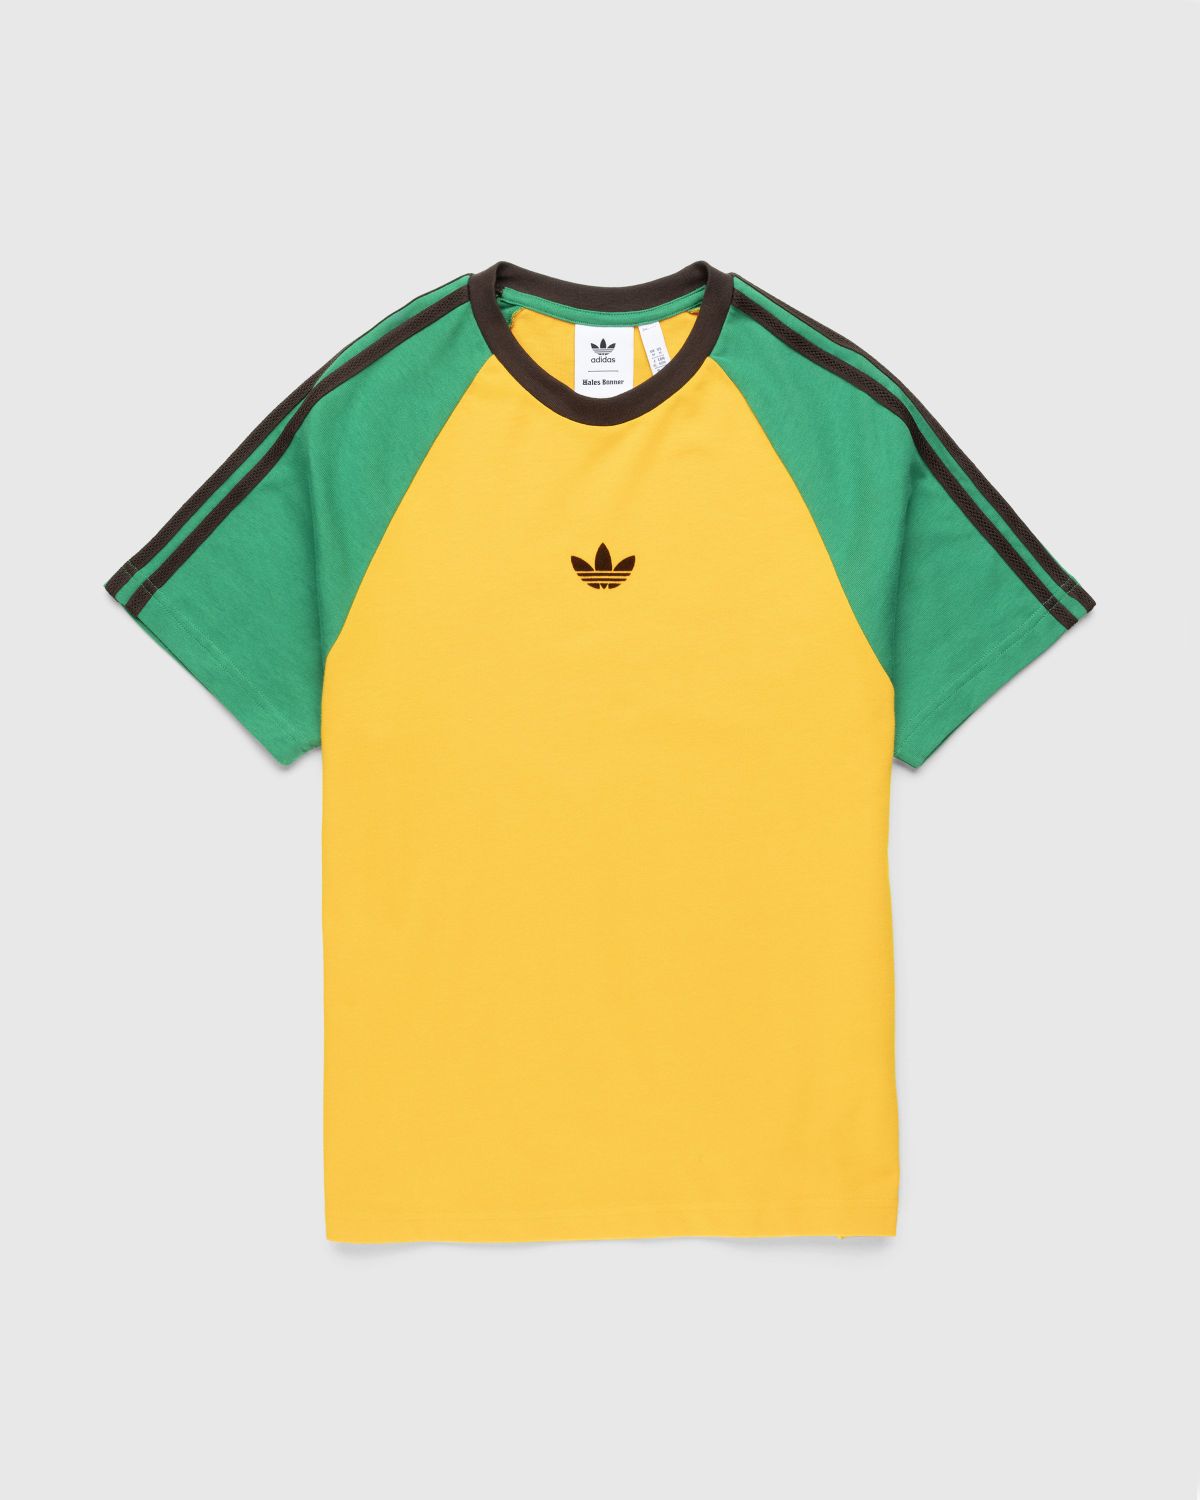 Adidas x Wales Bonner – Organic Cotton Tee Collegiate Gold - T-shirts - Yellow - Image 1